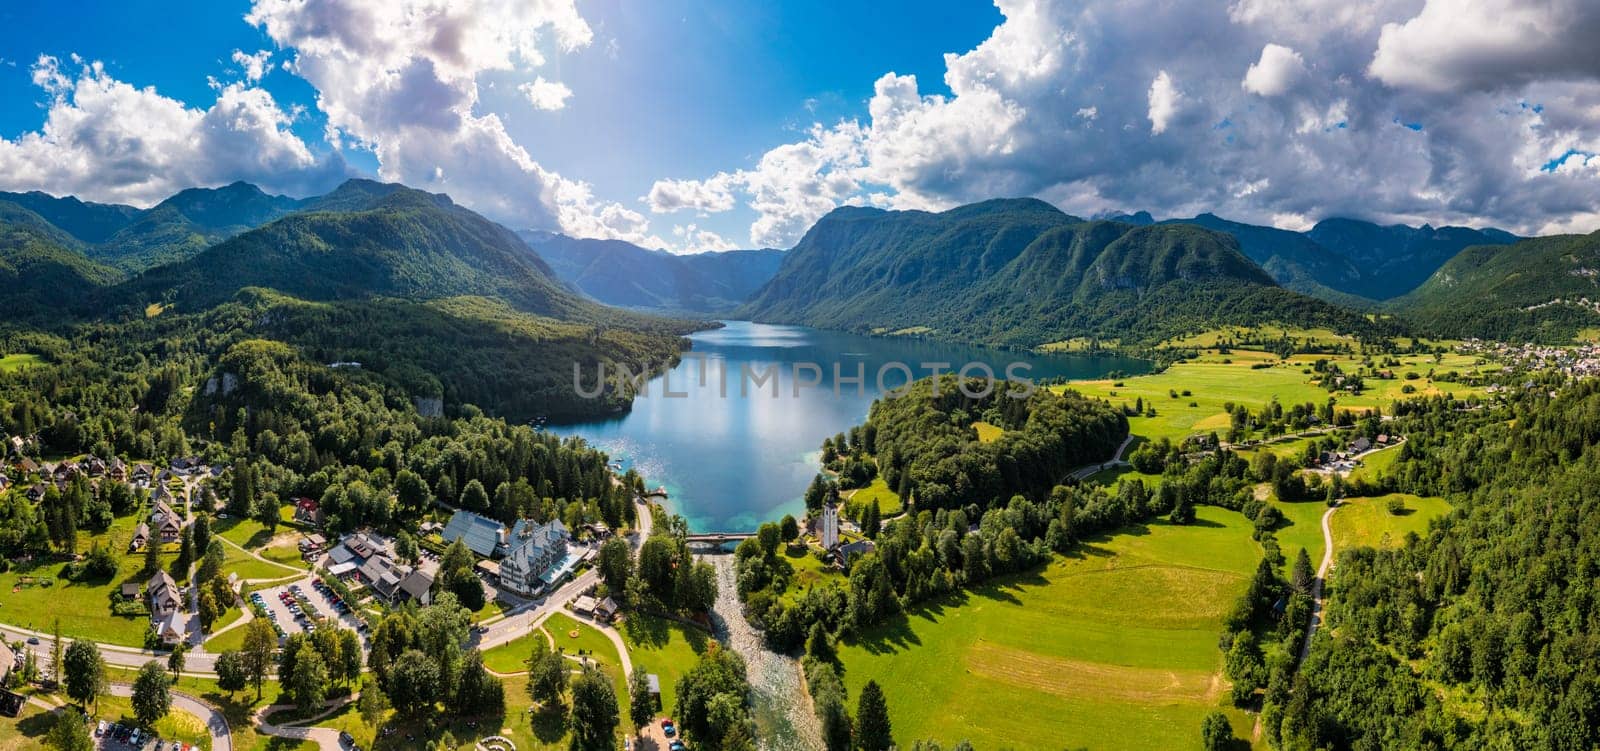 Aerial view of Bohinj lake in Julian Alps. Popular touristic destination in Slovenia. Bohinj Lake, Church of St John the Baptist. Triglav National Park, Julian Alps, Slovenia.  by DaLiu